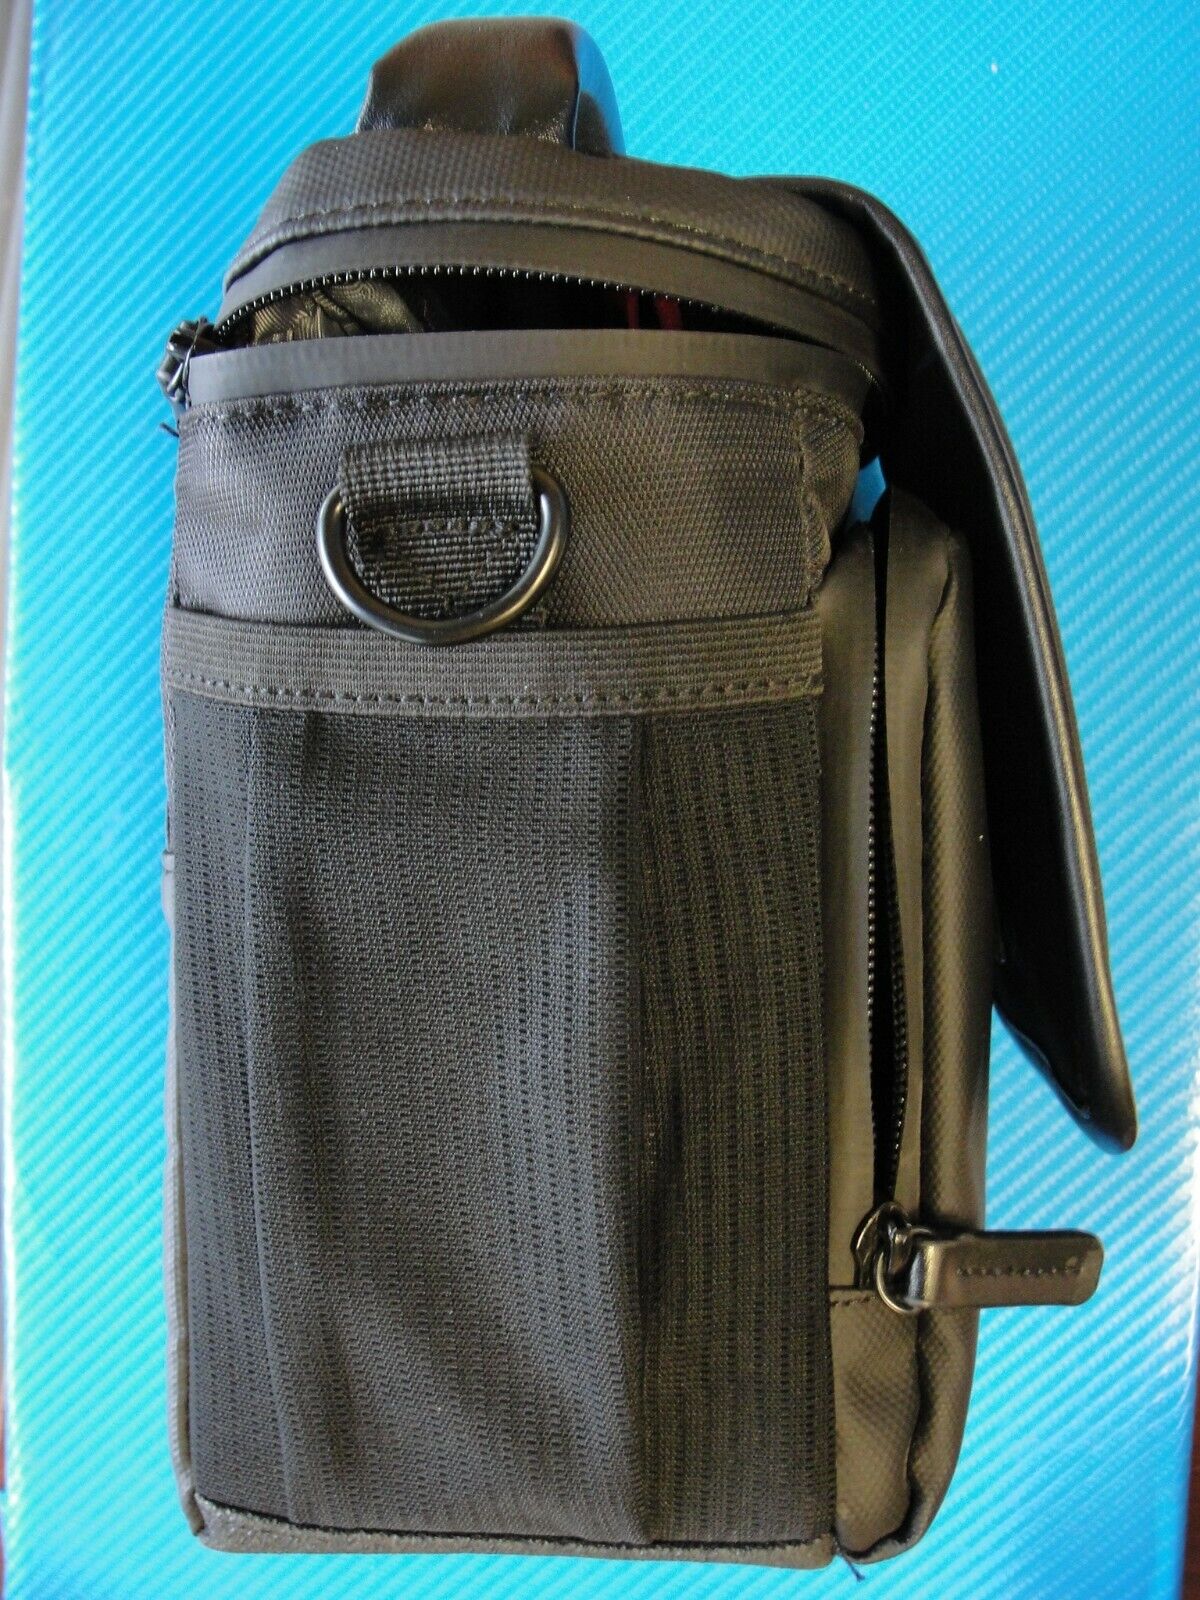 DJI Mavic Pro /Platinum Drone Genuine DJI Carrying Protective Bag Case +Shoulder